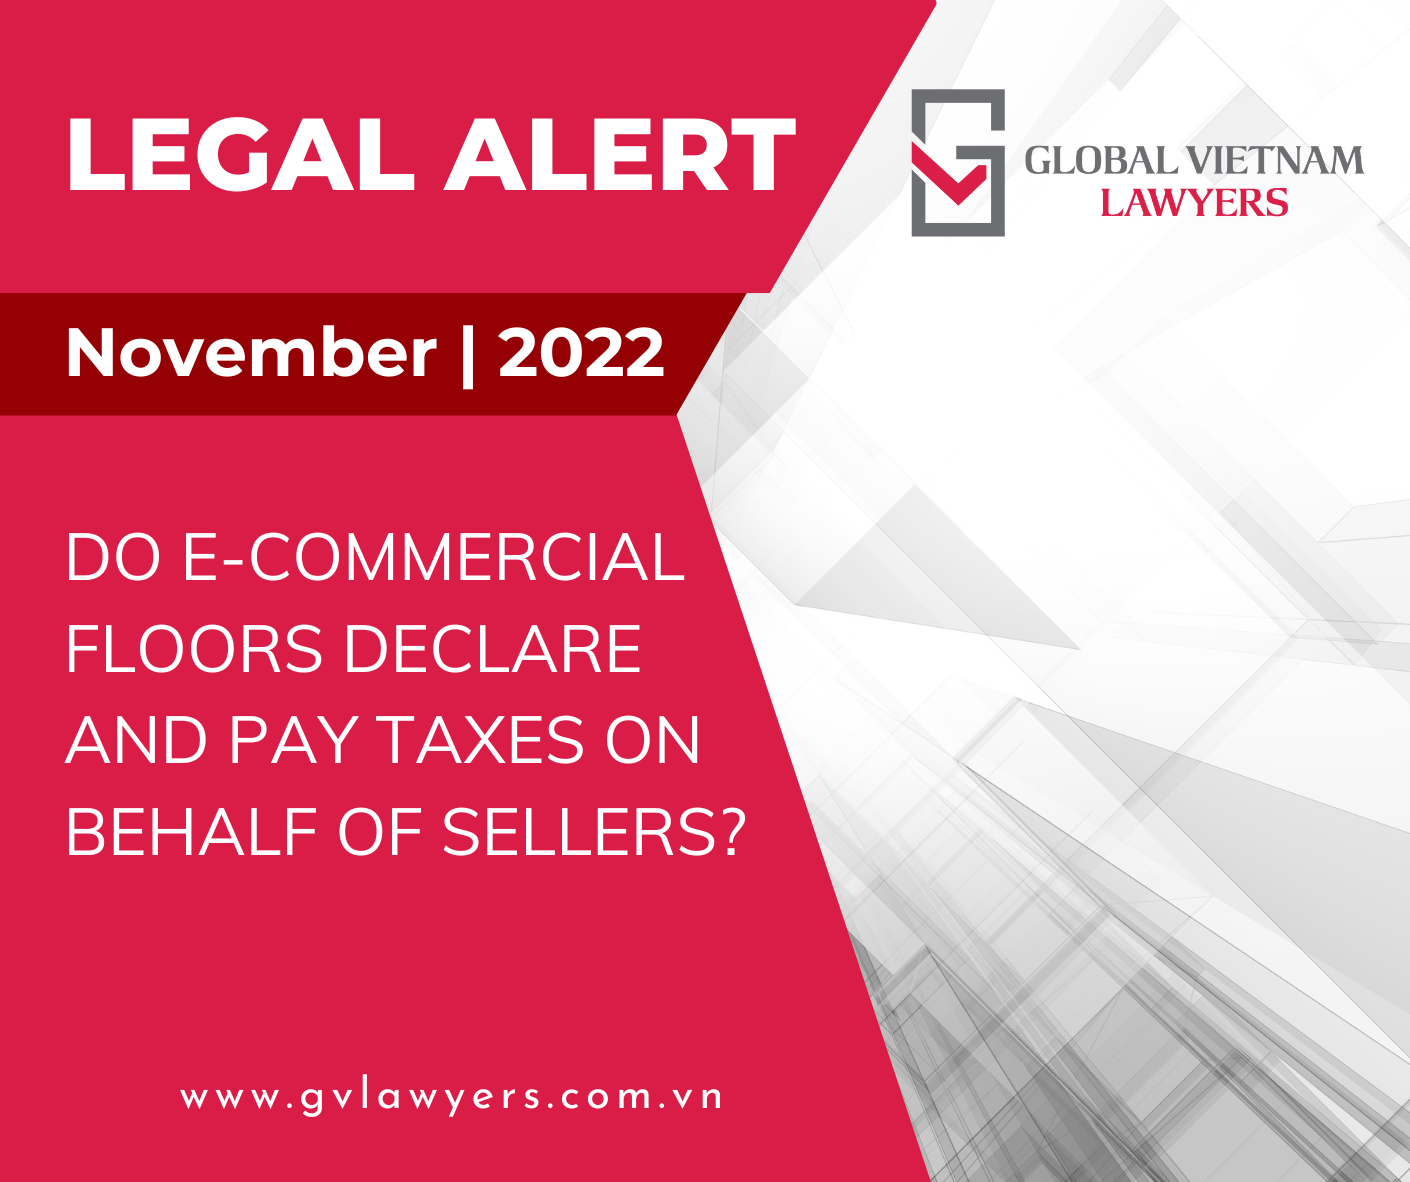 Legal Alert November 2022 EN 2